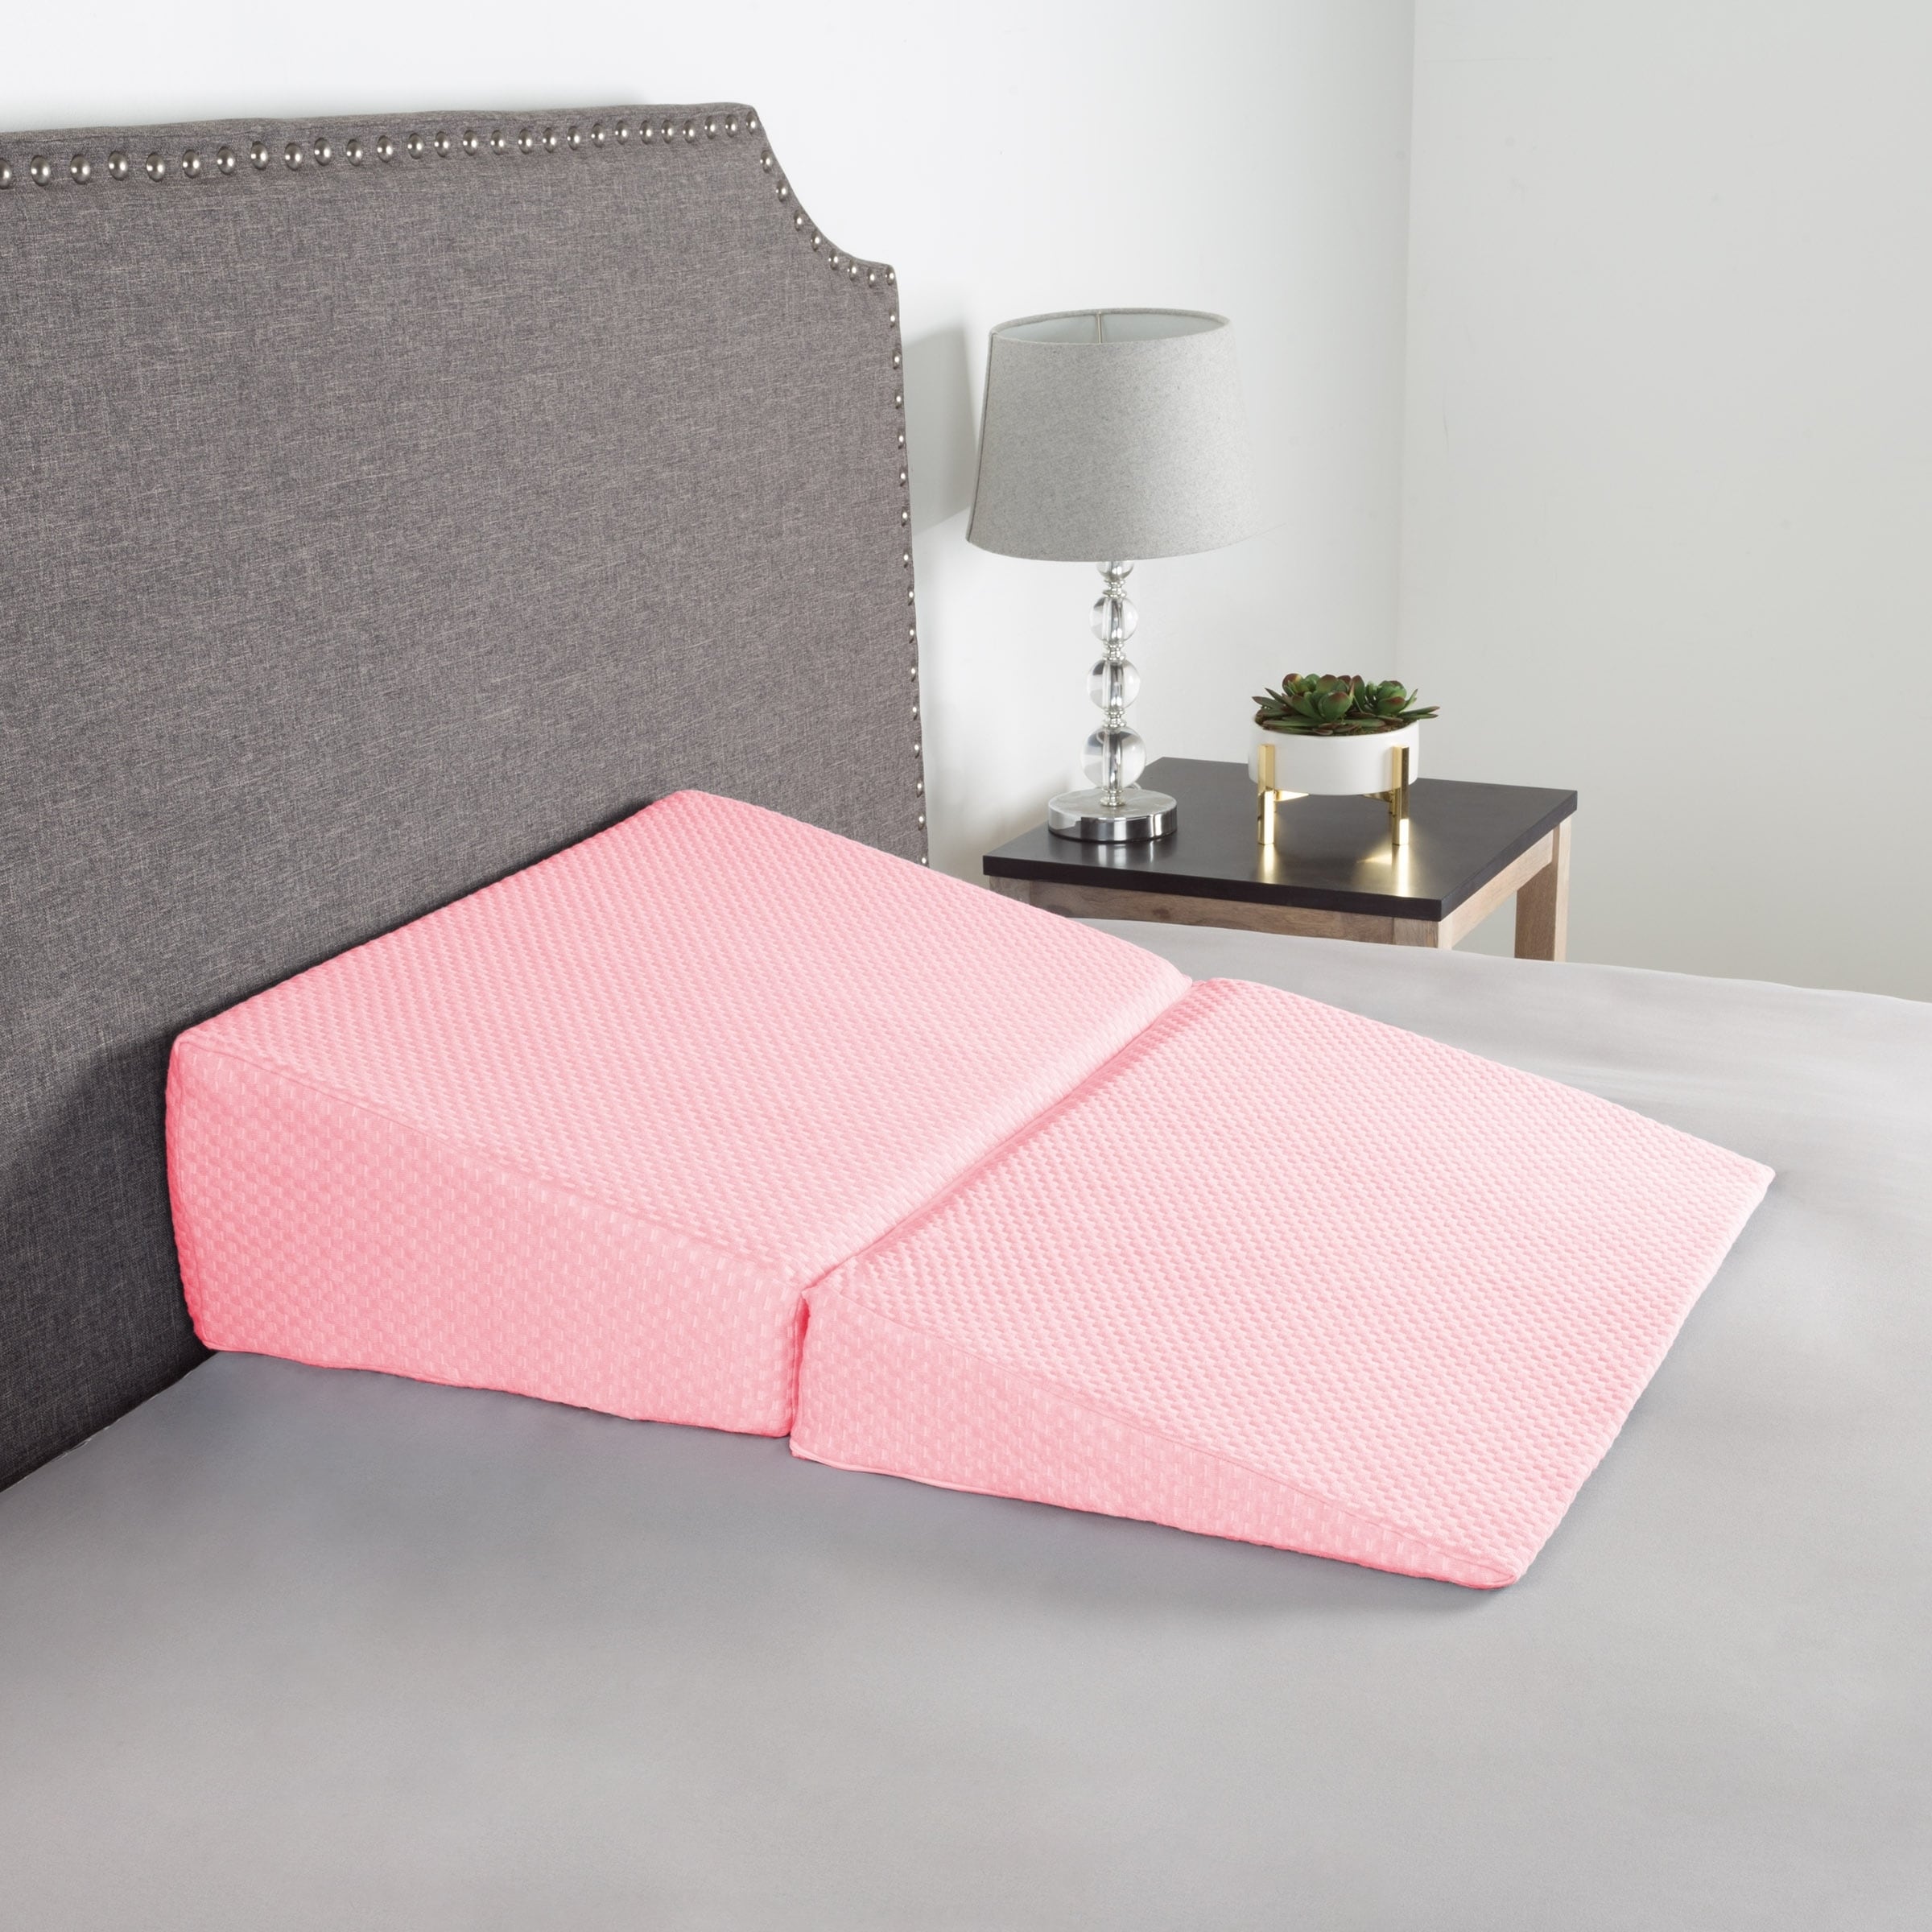 comfort bed wedge pillow folding memory